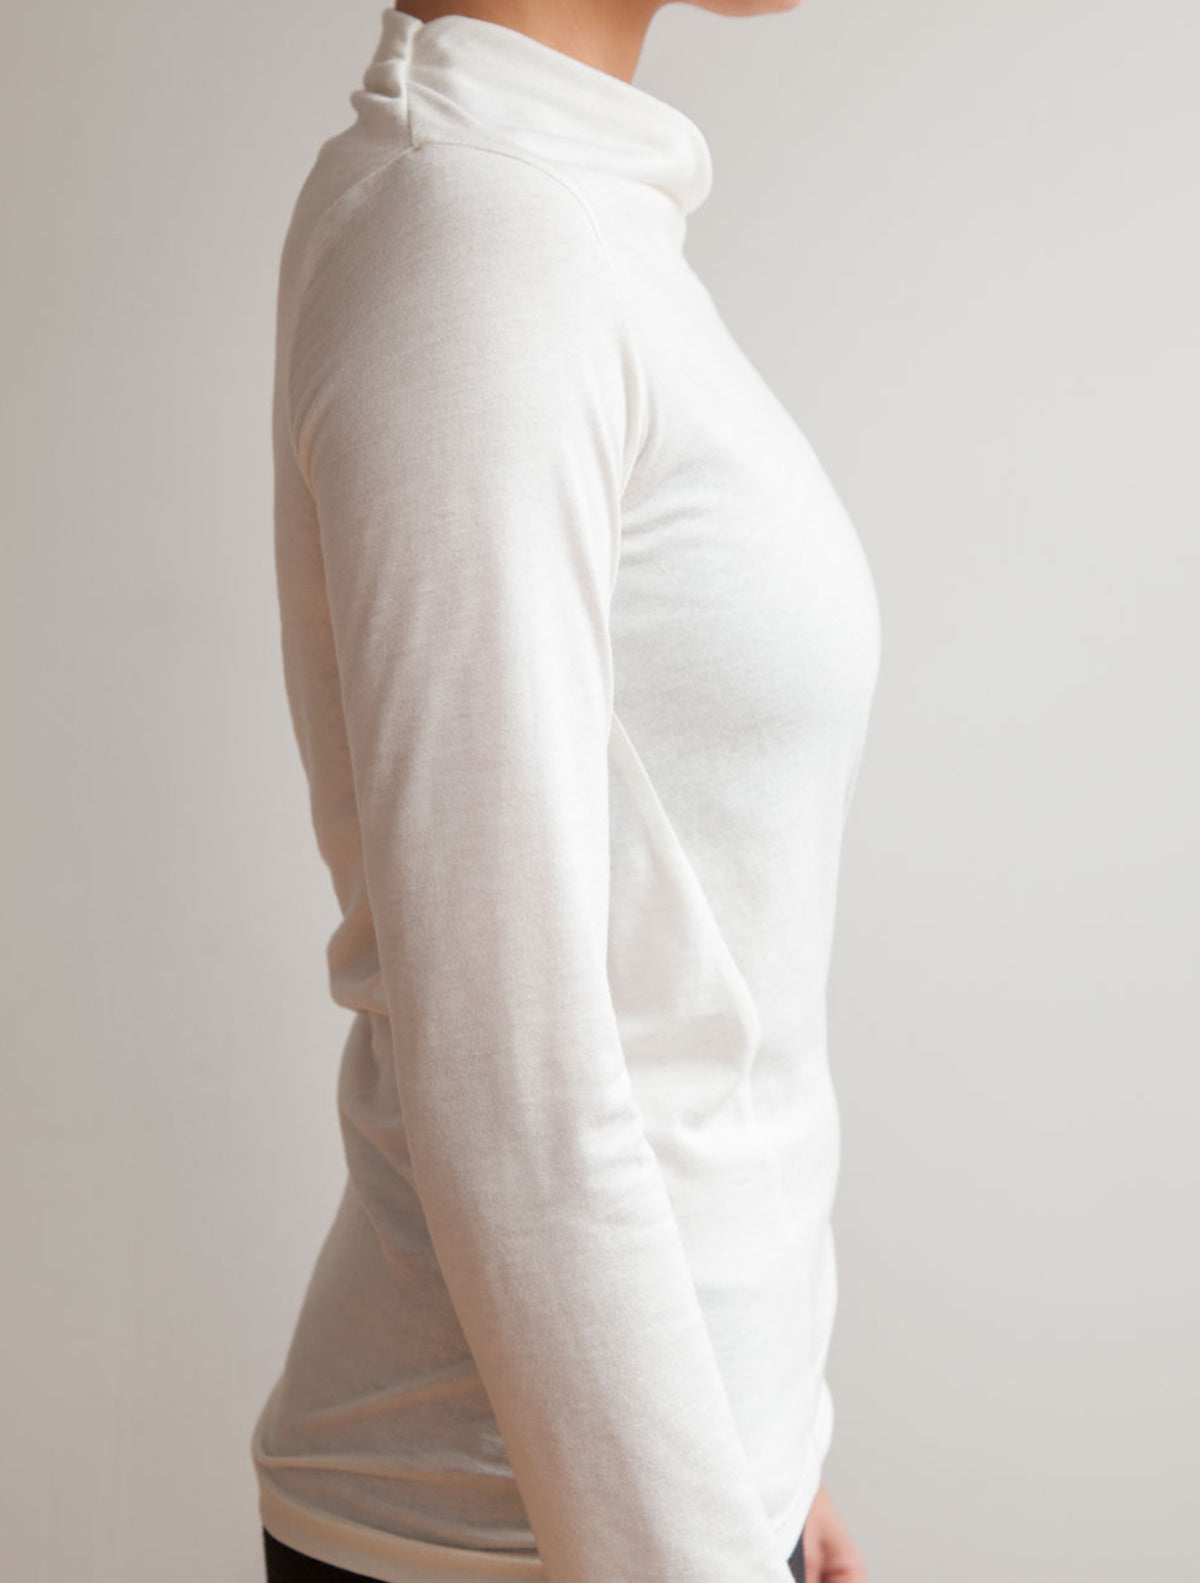 side view of model wearing simulacra's white Long Sleeve Twist Top 